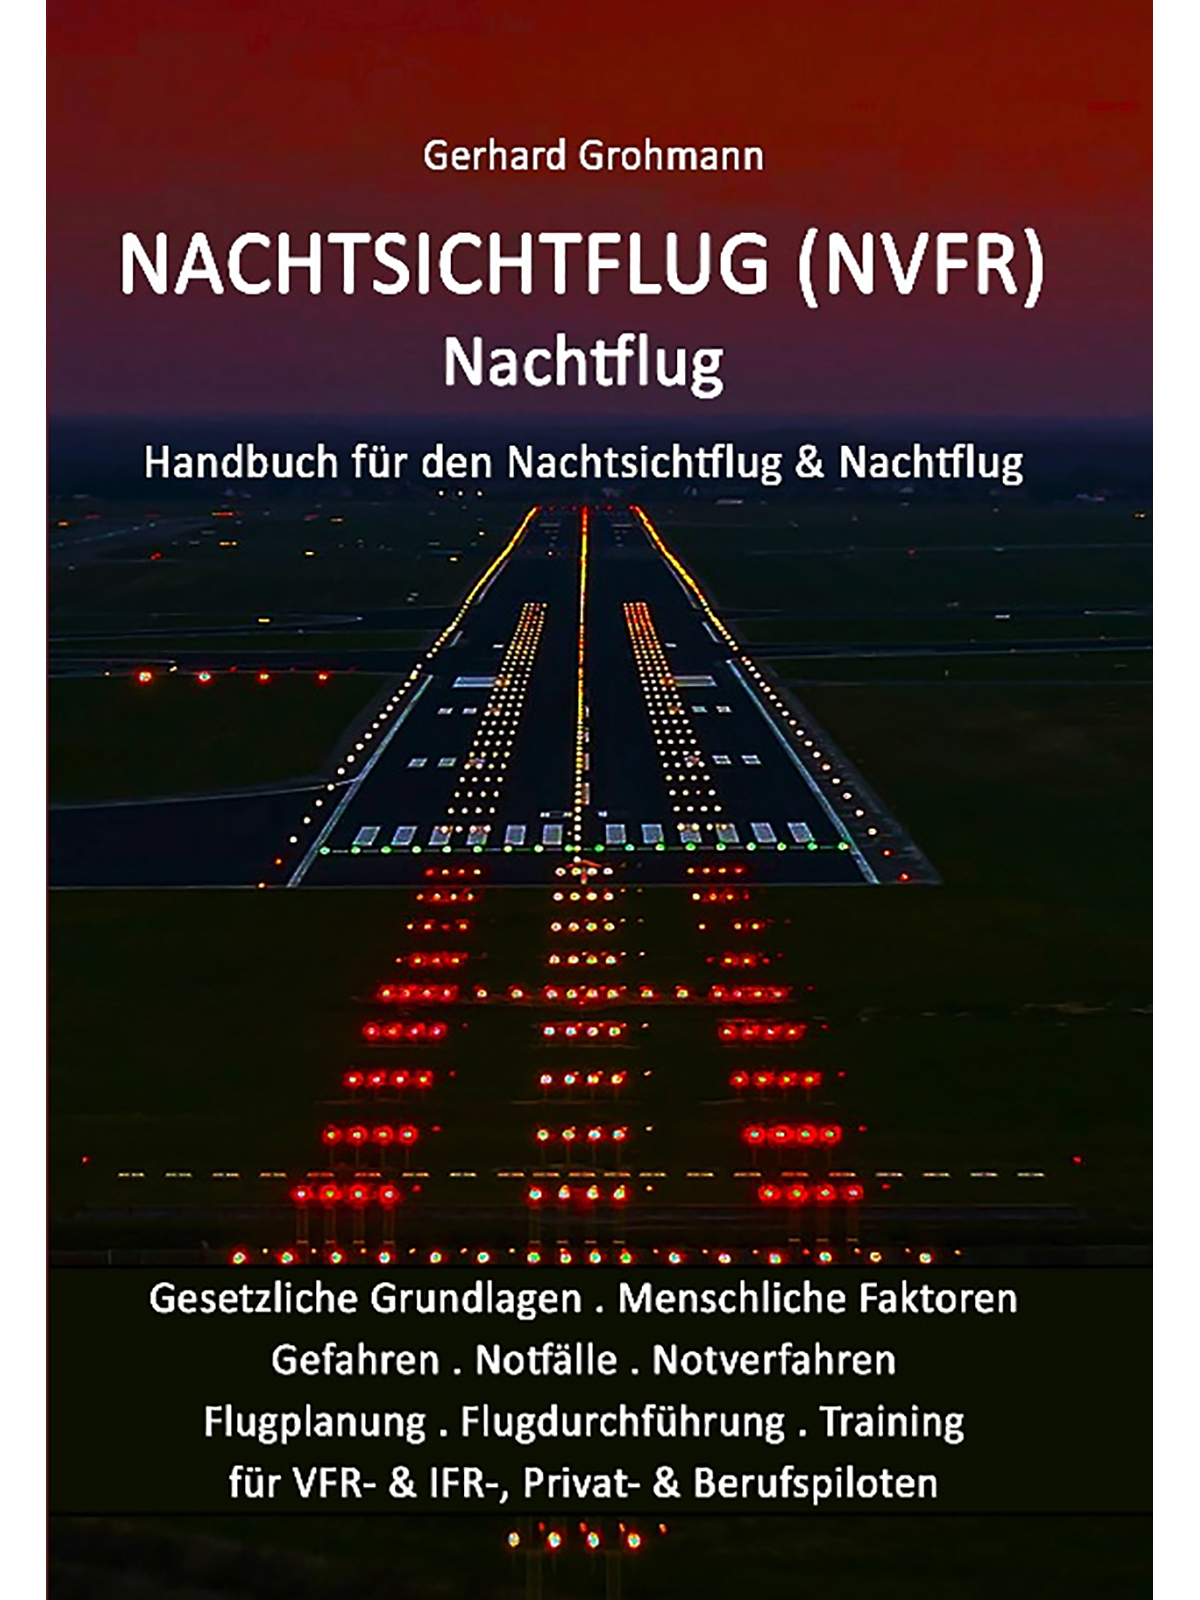 Nachtsichtflug (NVFR) - Handbuch für den Nachtsichtflug und Nachtflug